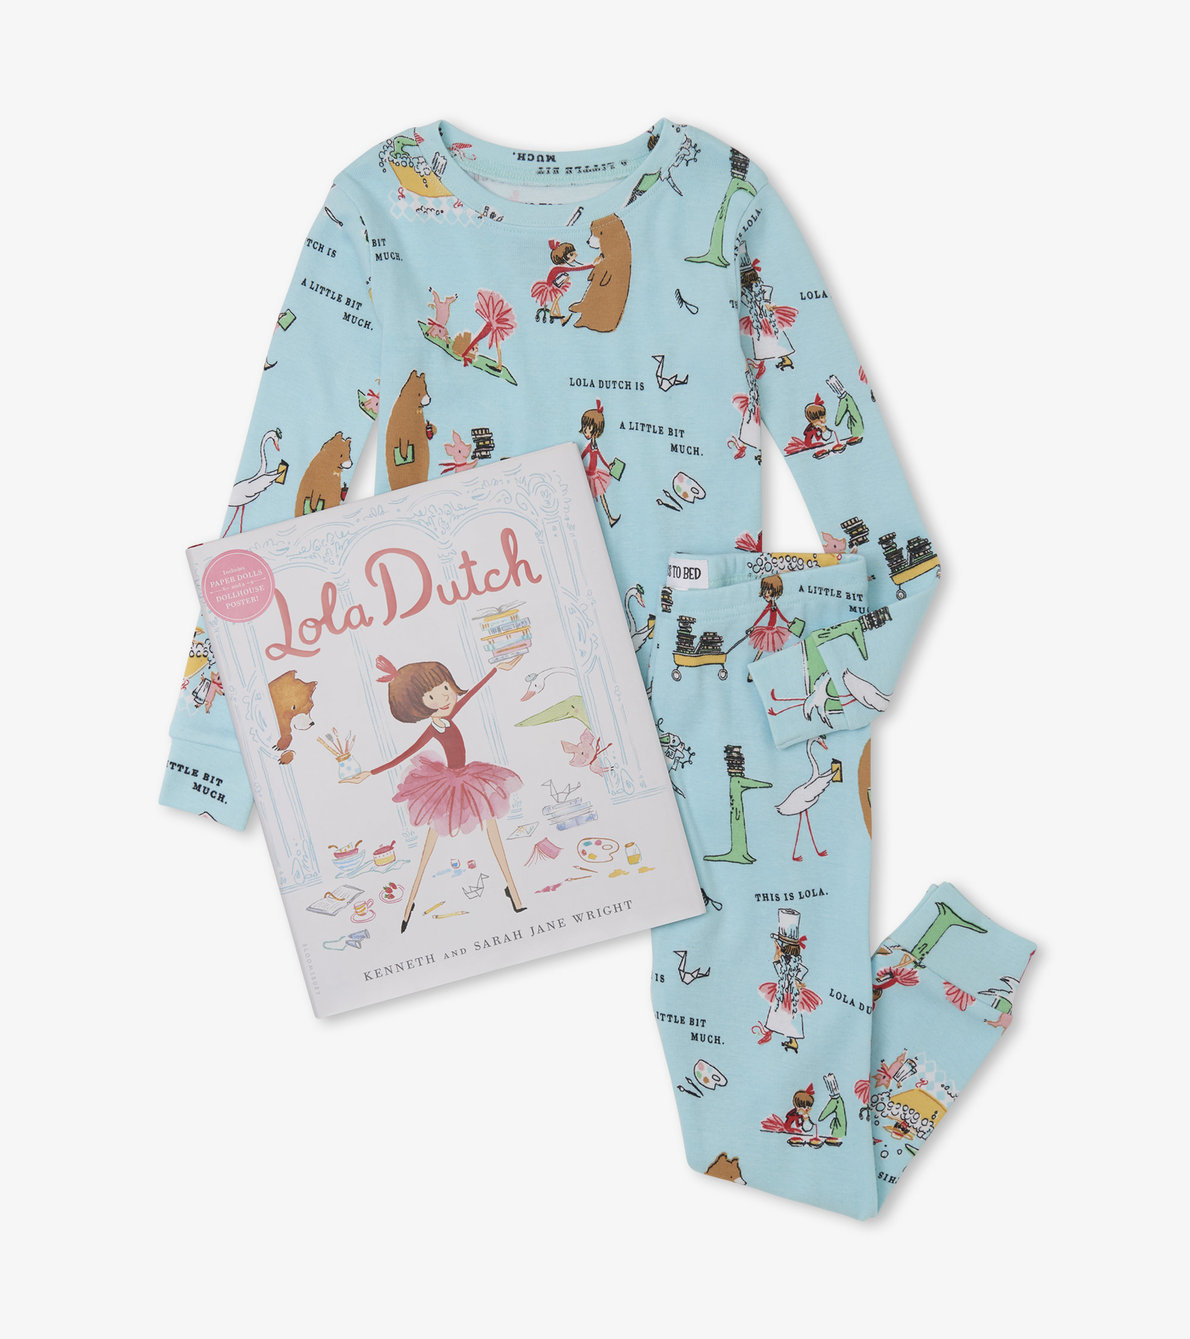 View larger image of Lola Dutch Book and Pajama Set